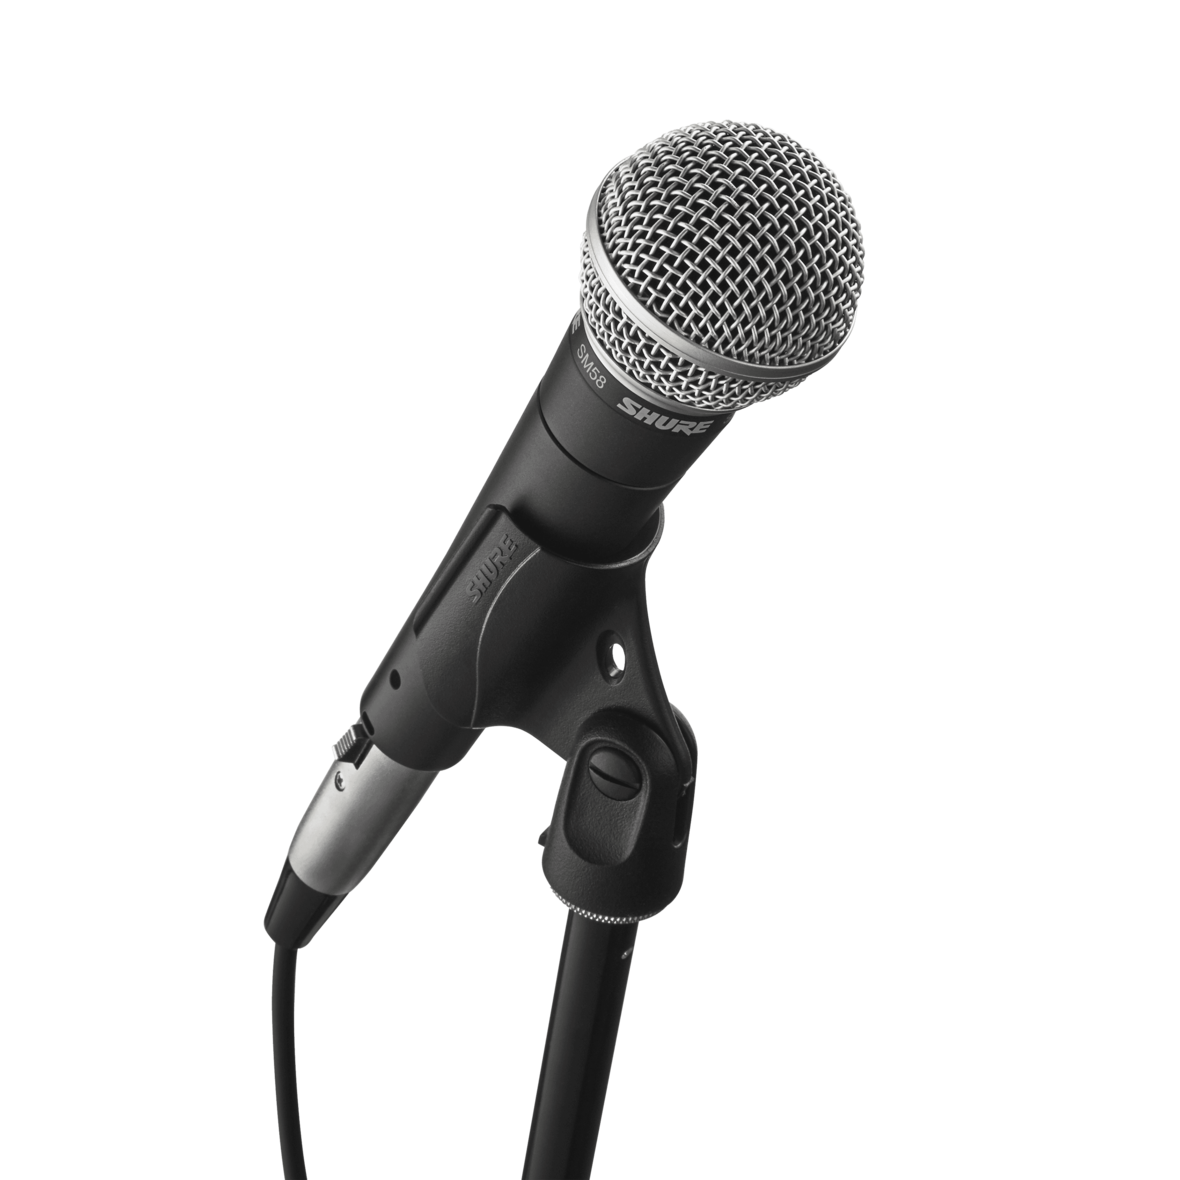 SM58® - Dynamic Vocal Microphone - Shure USA